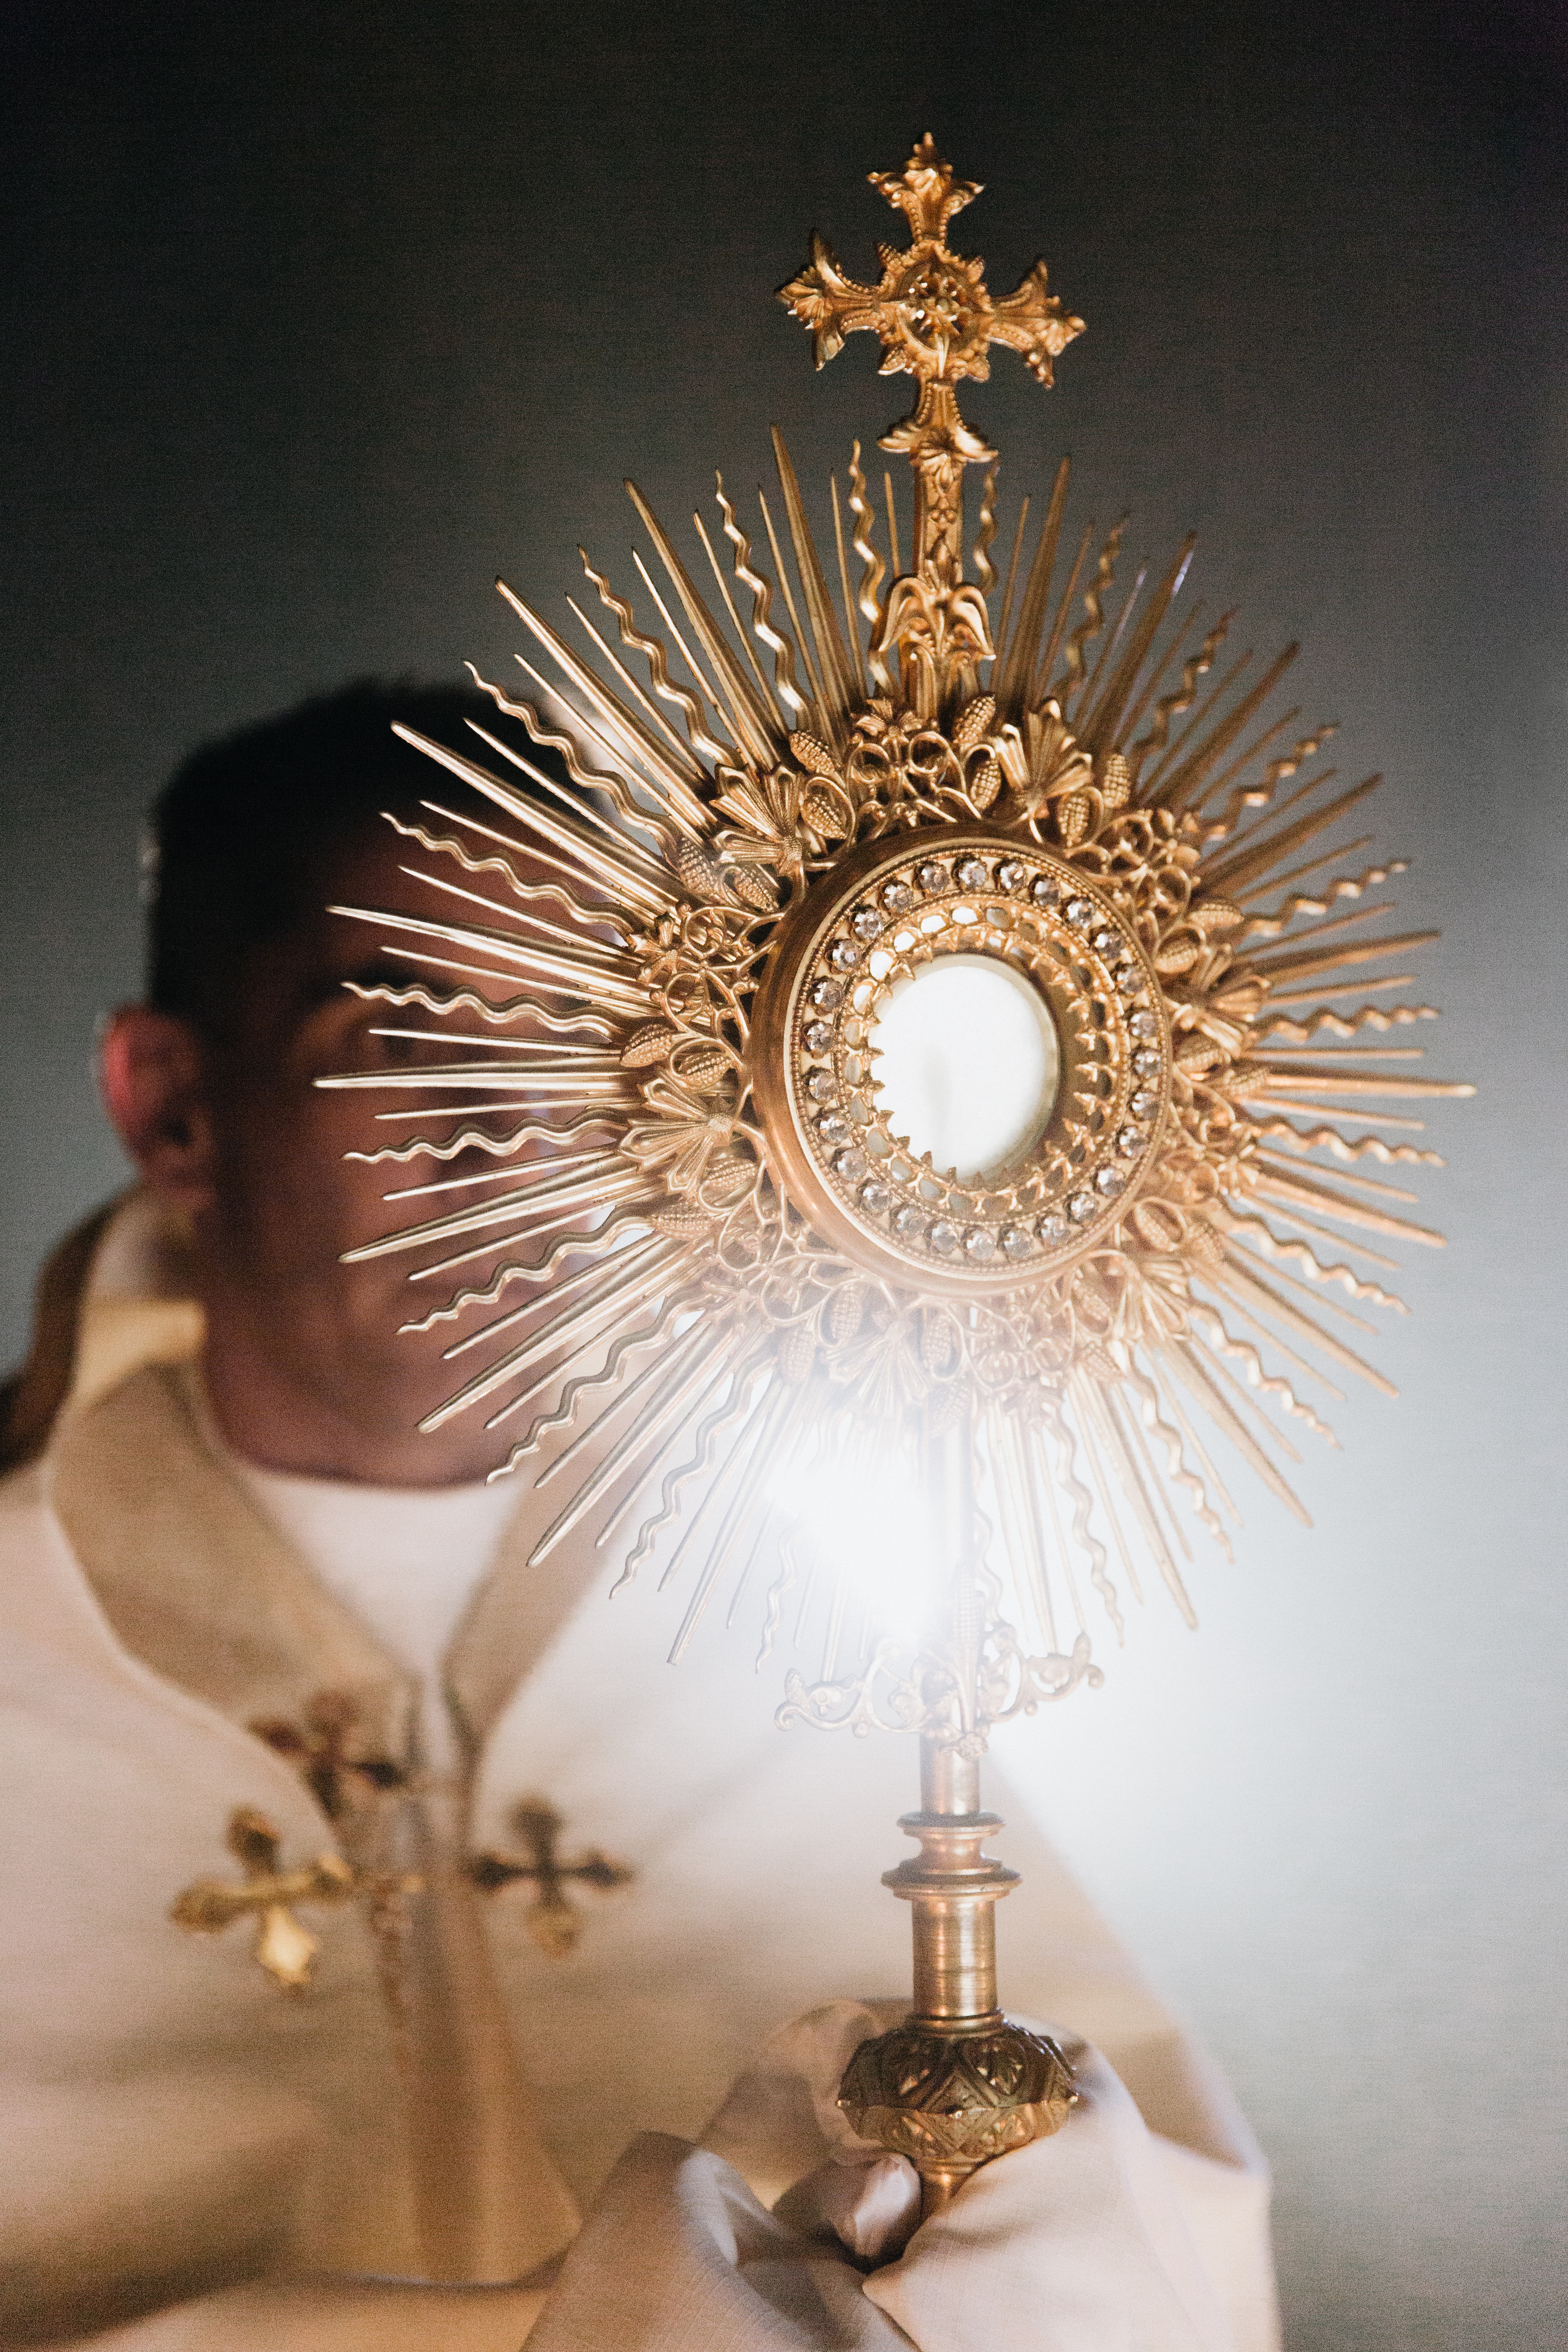 Light of the Eucharist